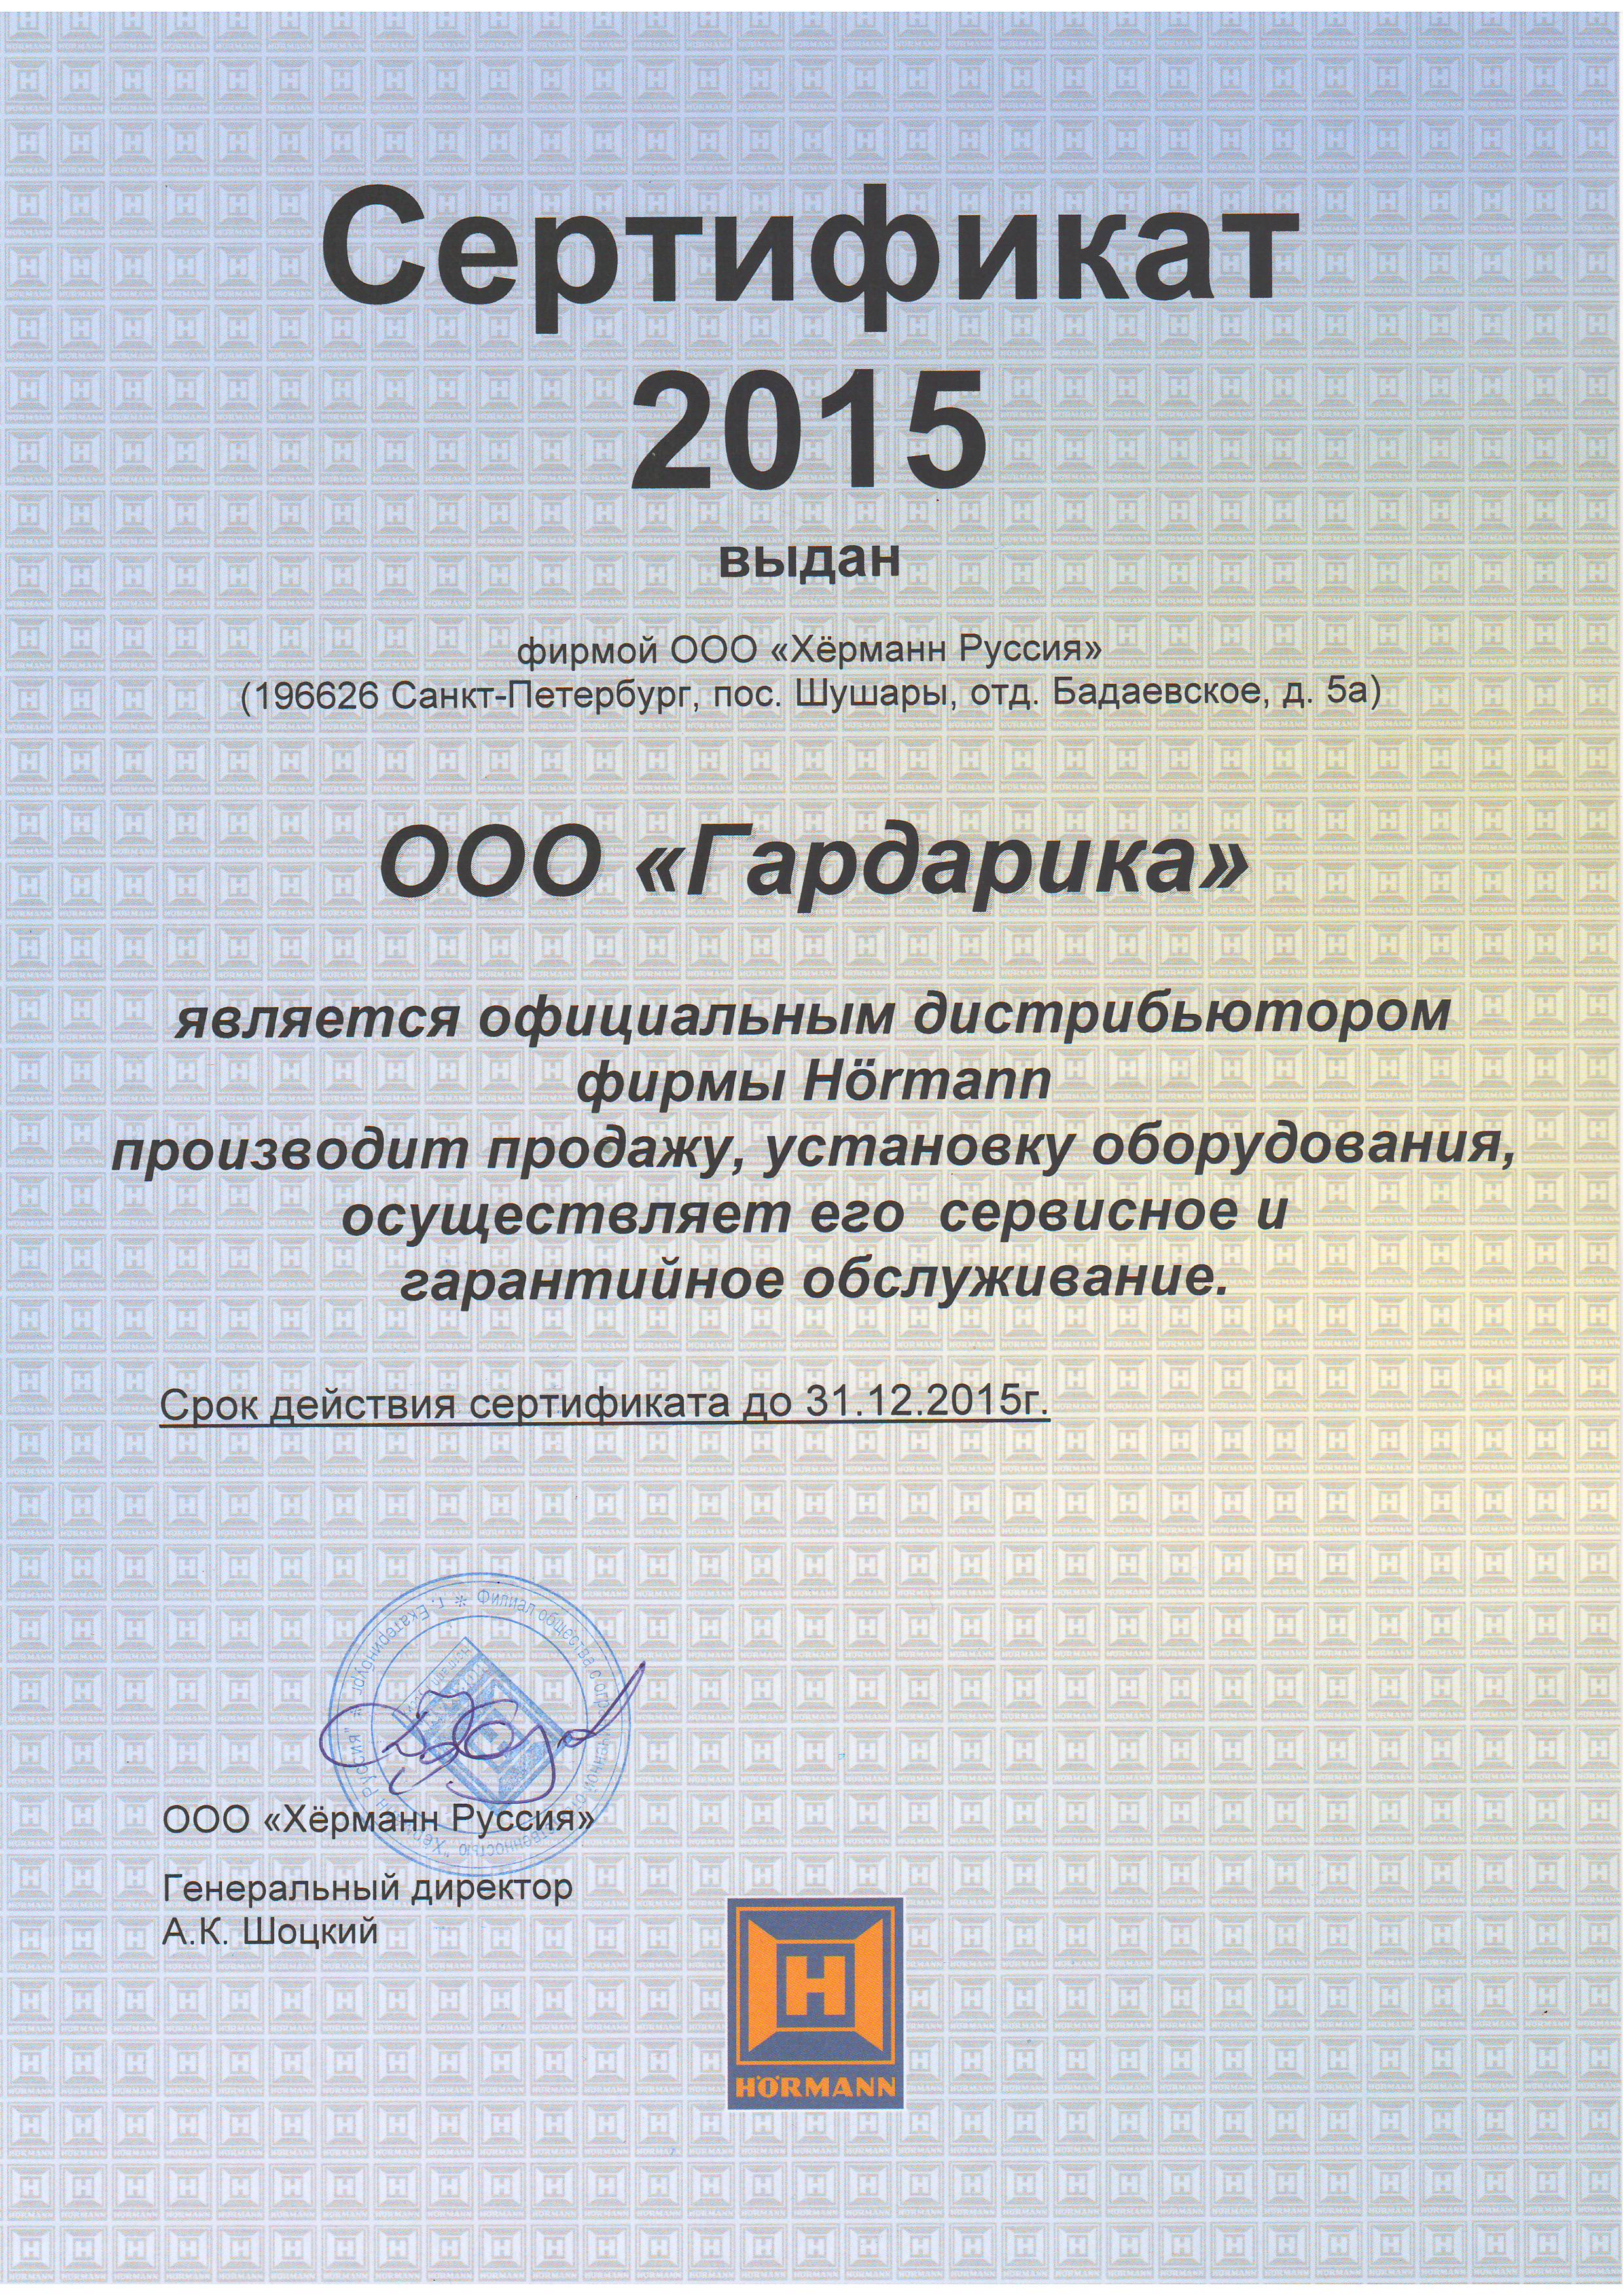 Сертификат дистрибьютора Hormann 2015